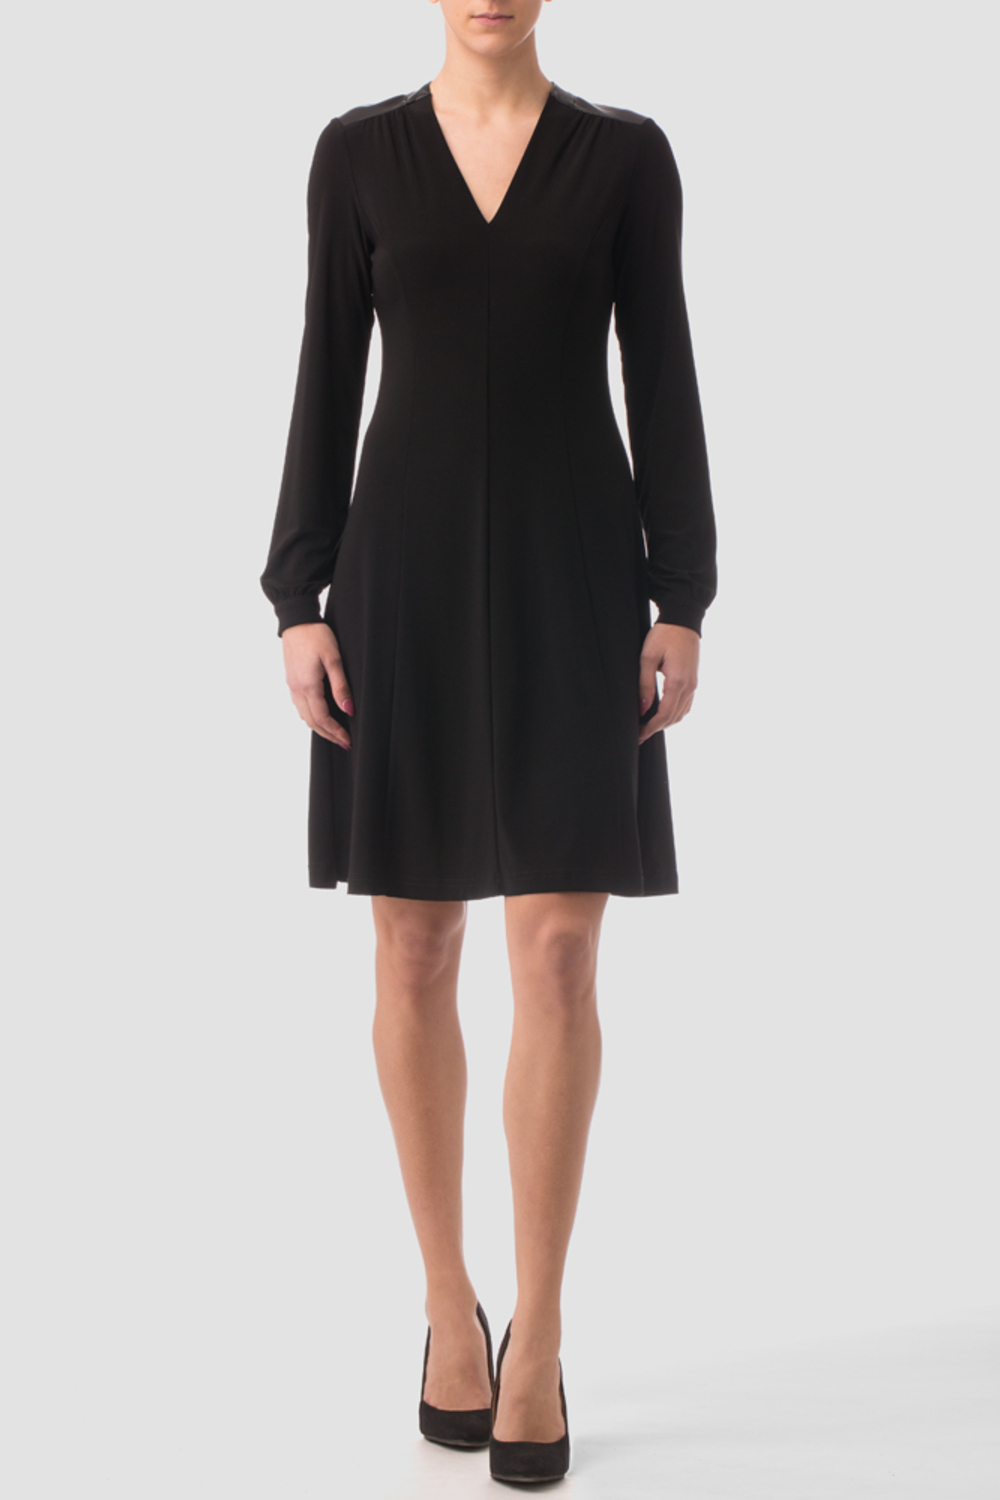 Joseph Ribkoff dress style 163399. Black/black